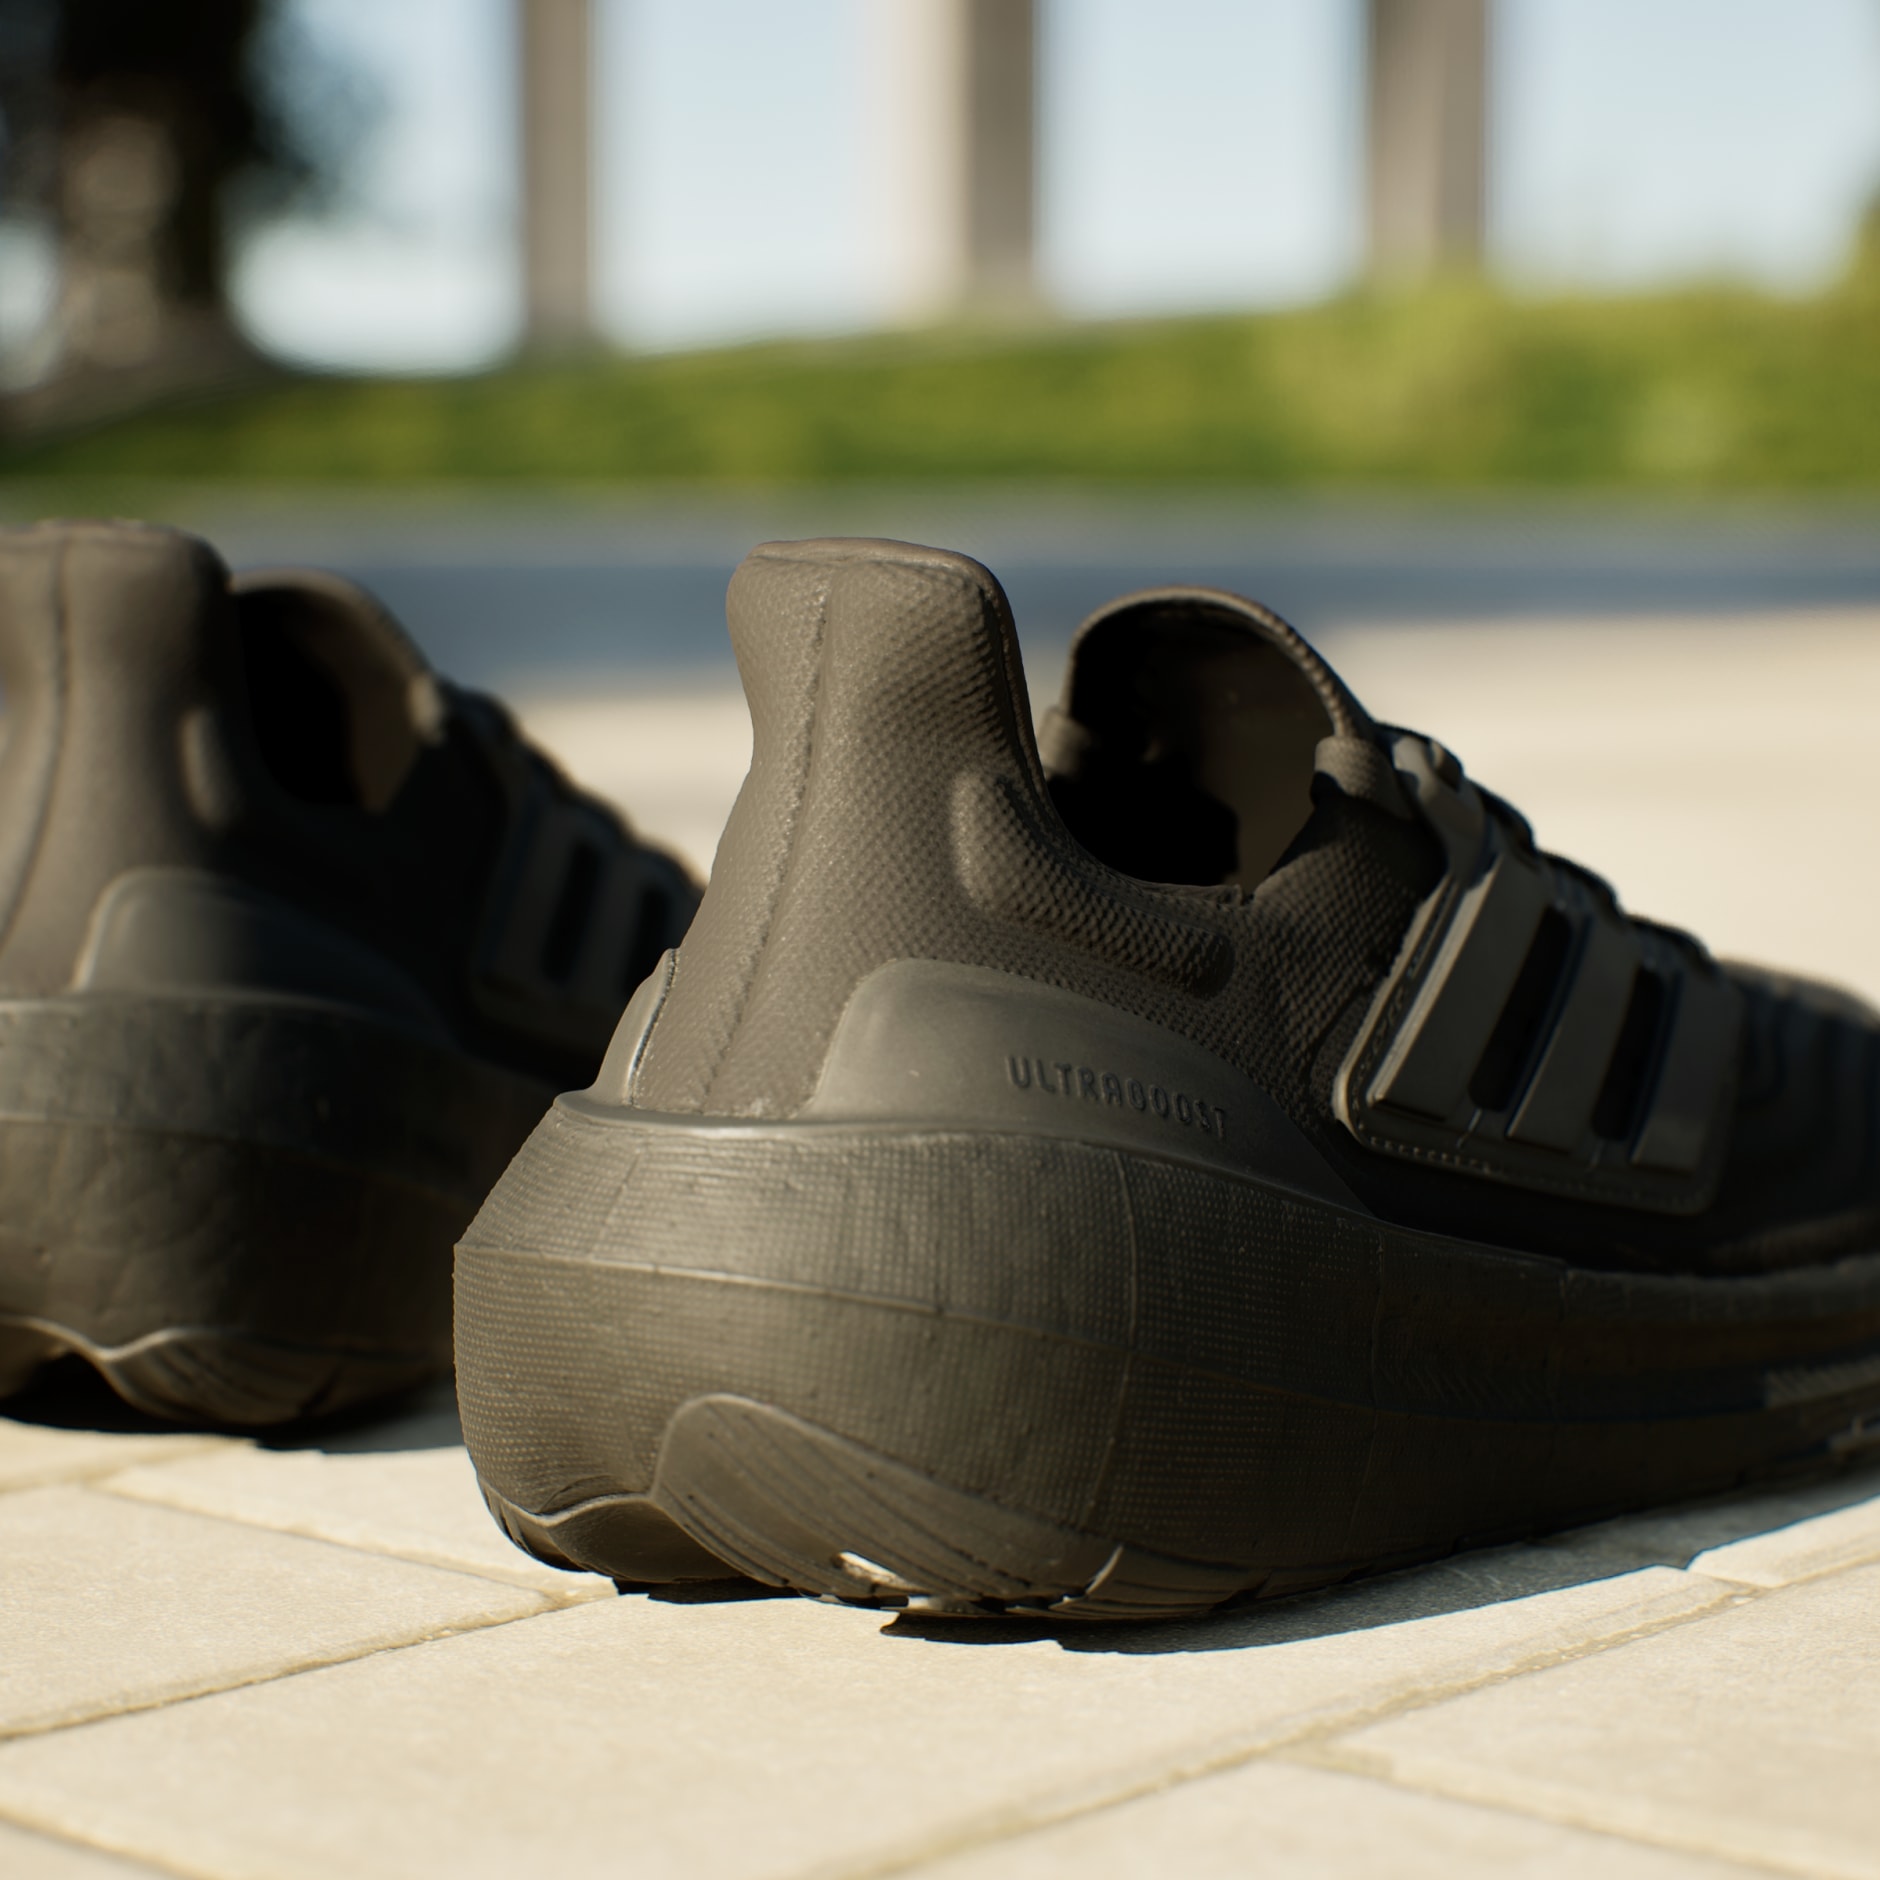 adidas Ultraboost Light Shoes - Black | adidas UAE